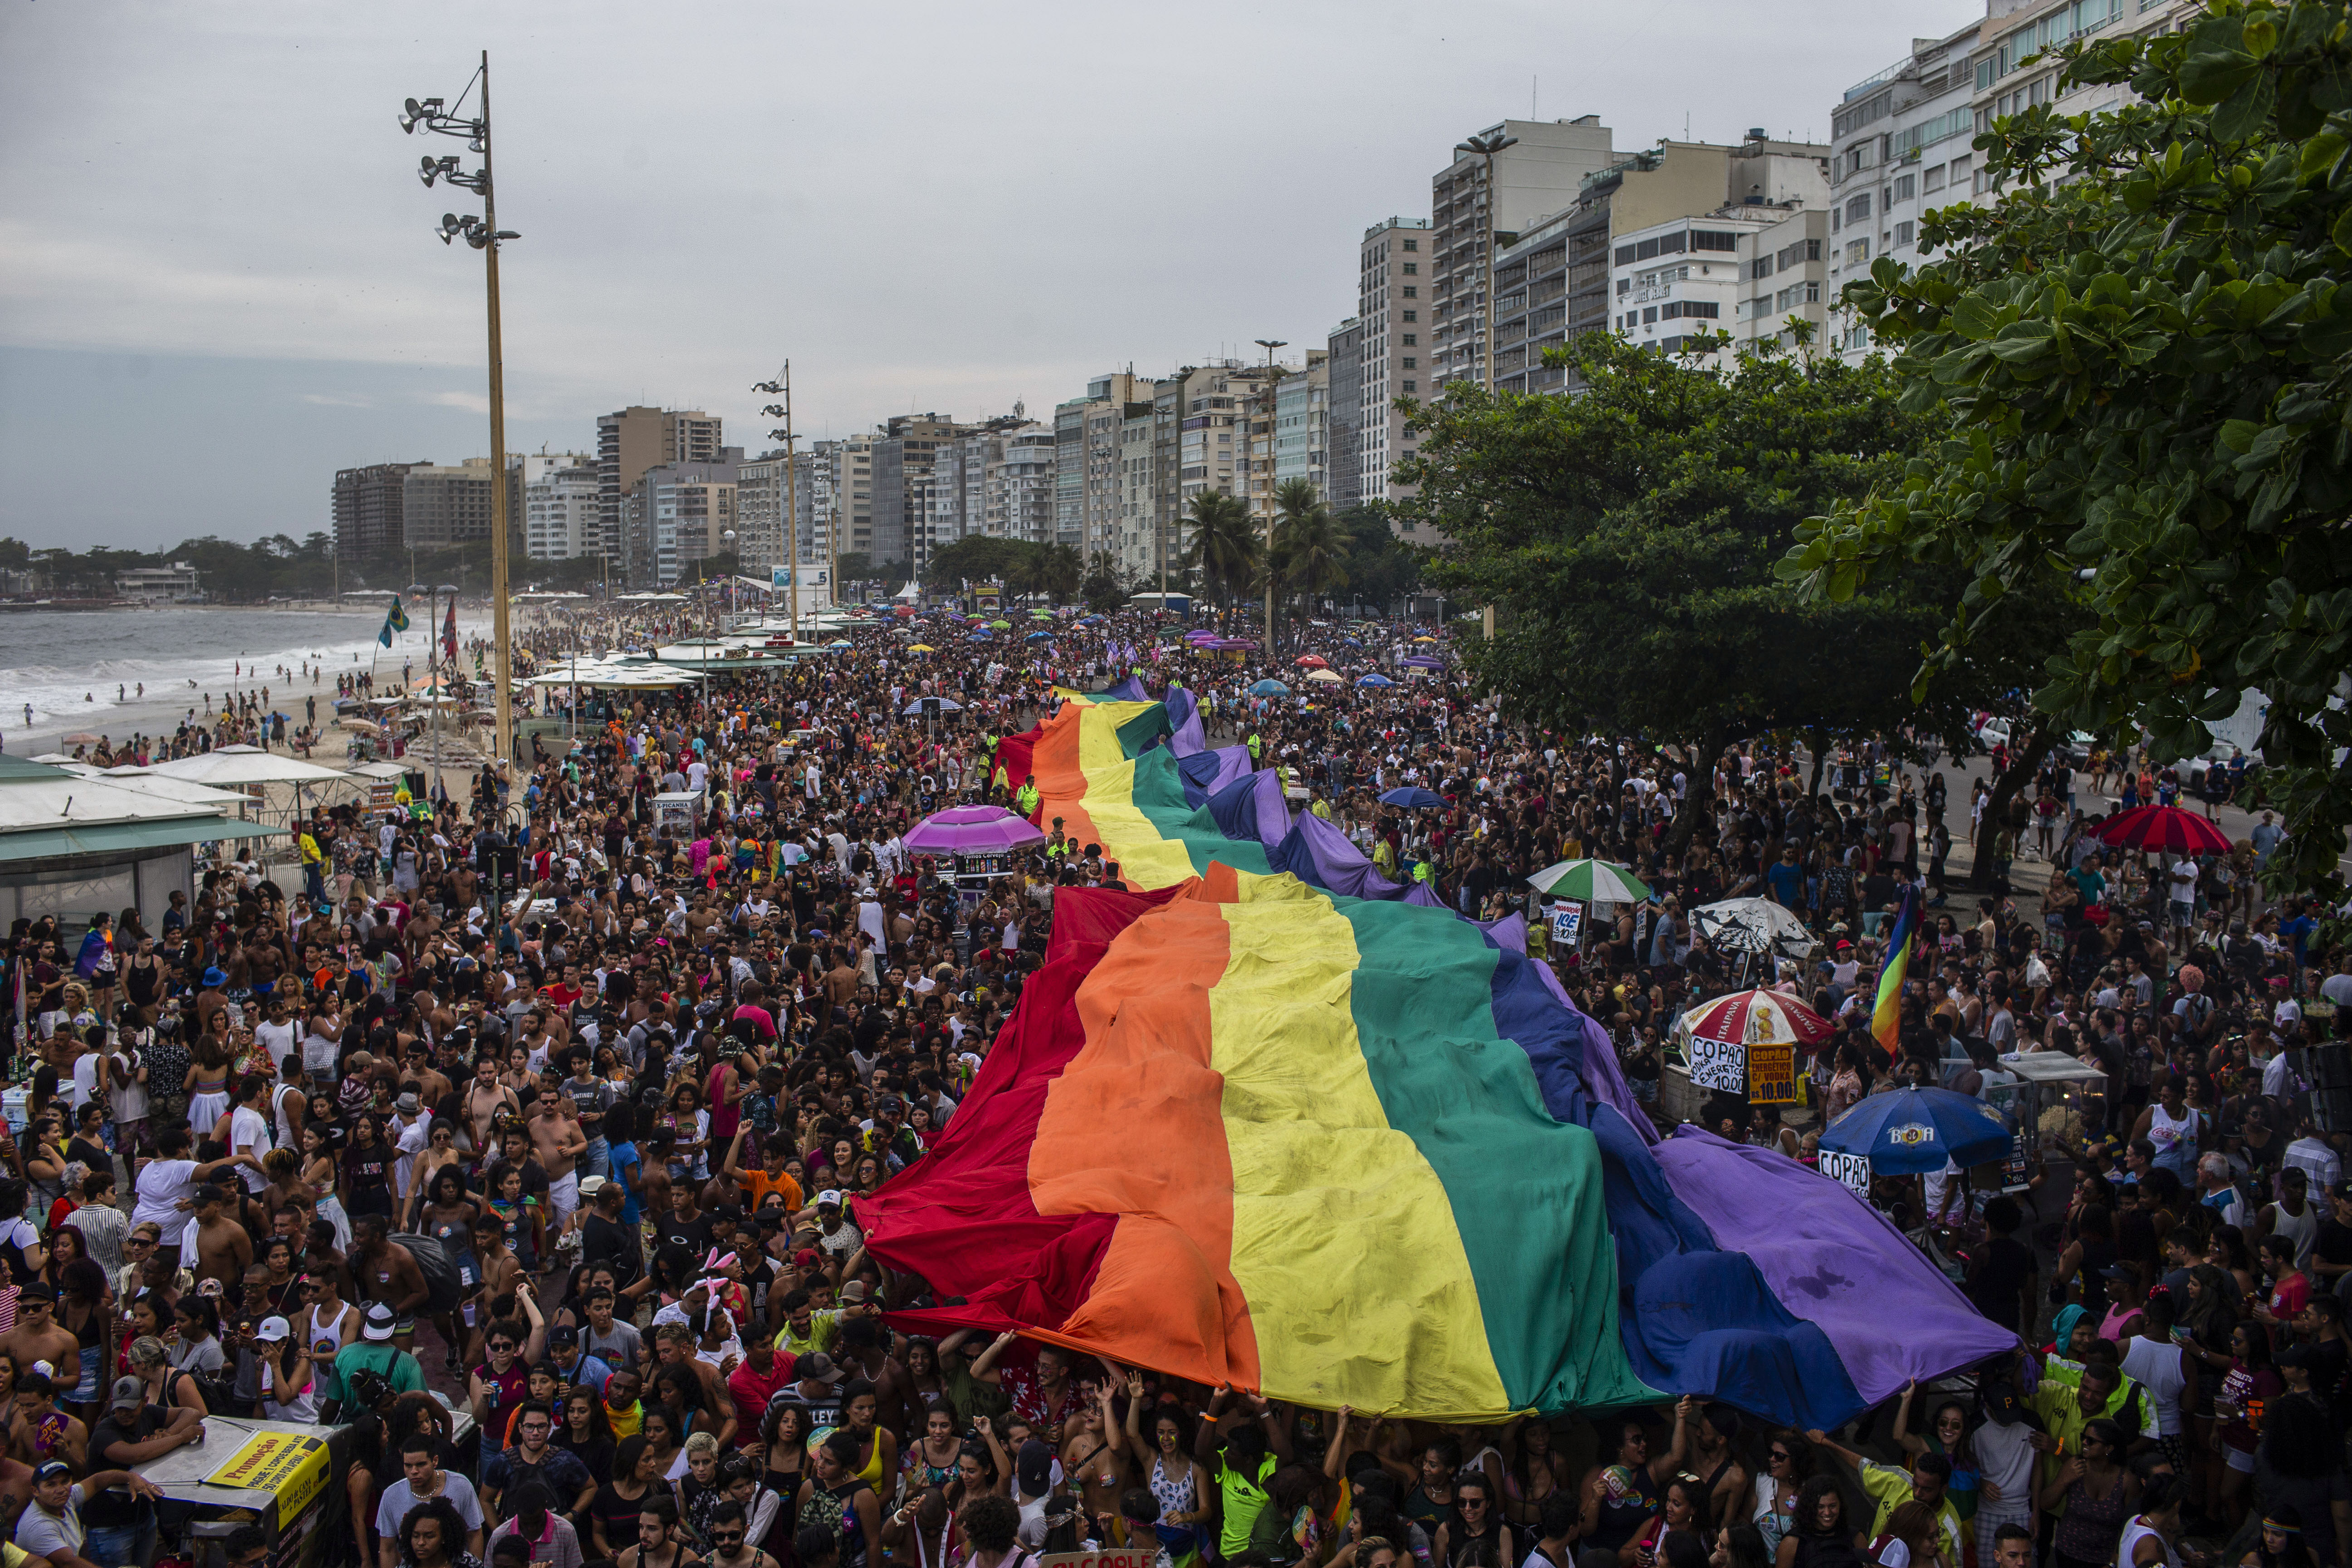 Brazil's president says criminalizing homophobia could 'hurt' gays